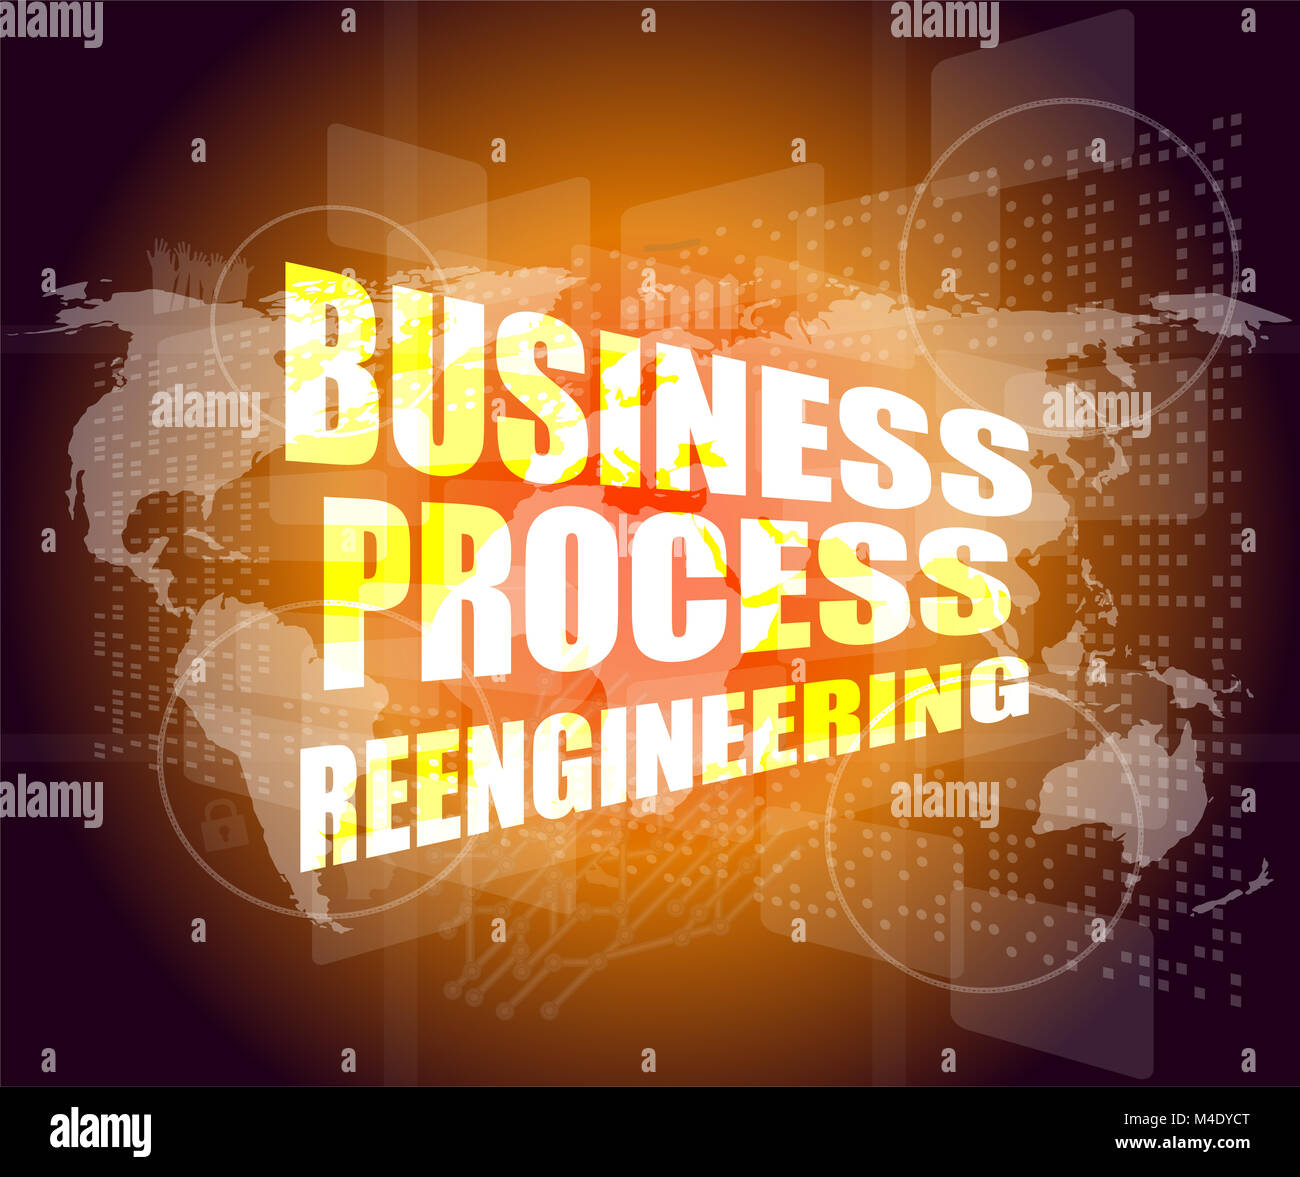 business process reengineering interface hi technology Stock Photo